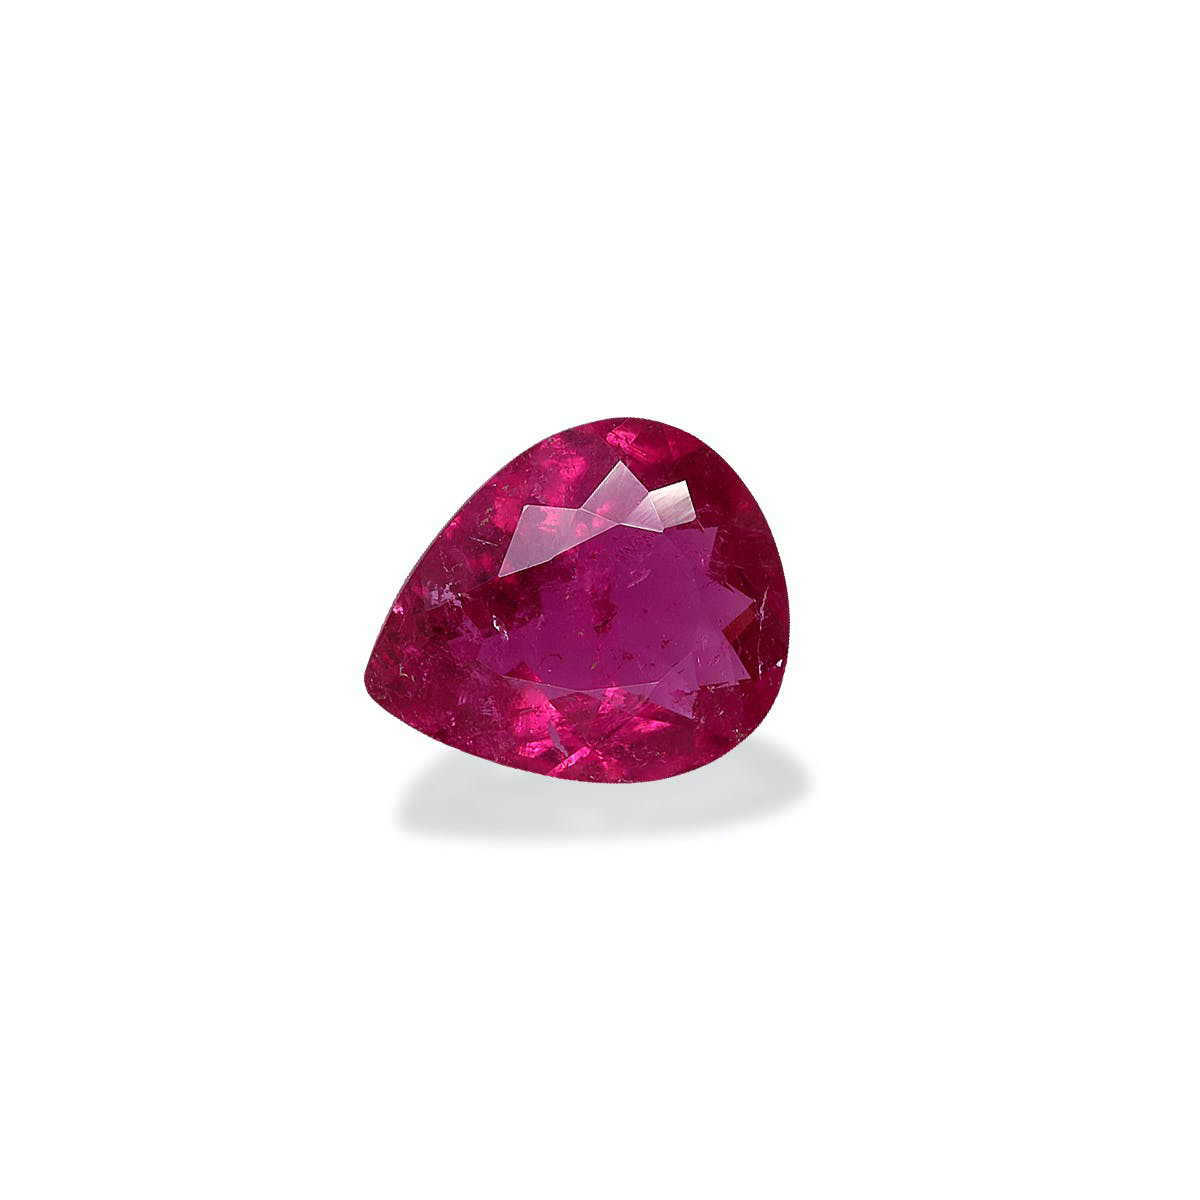 Picture of Vivid Pink Rubellite Tourmaline 3.05ct - 12x10mm (RL0977)